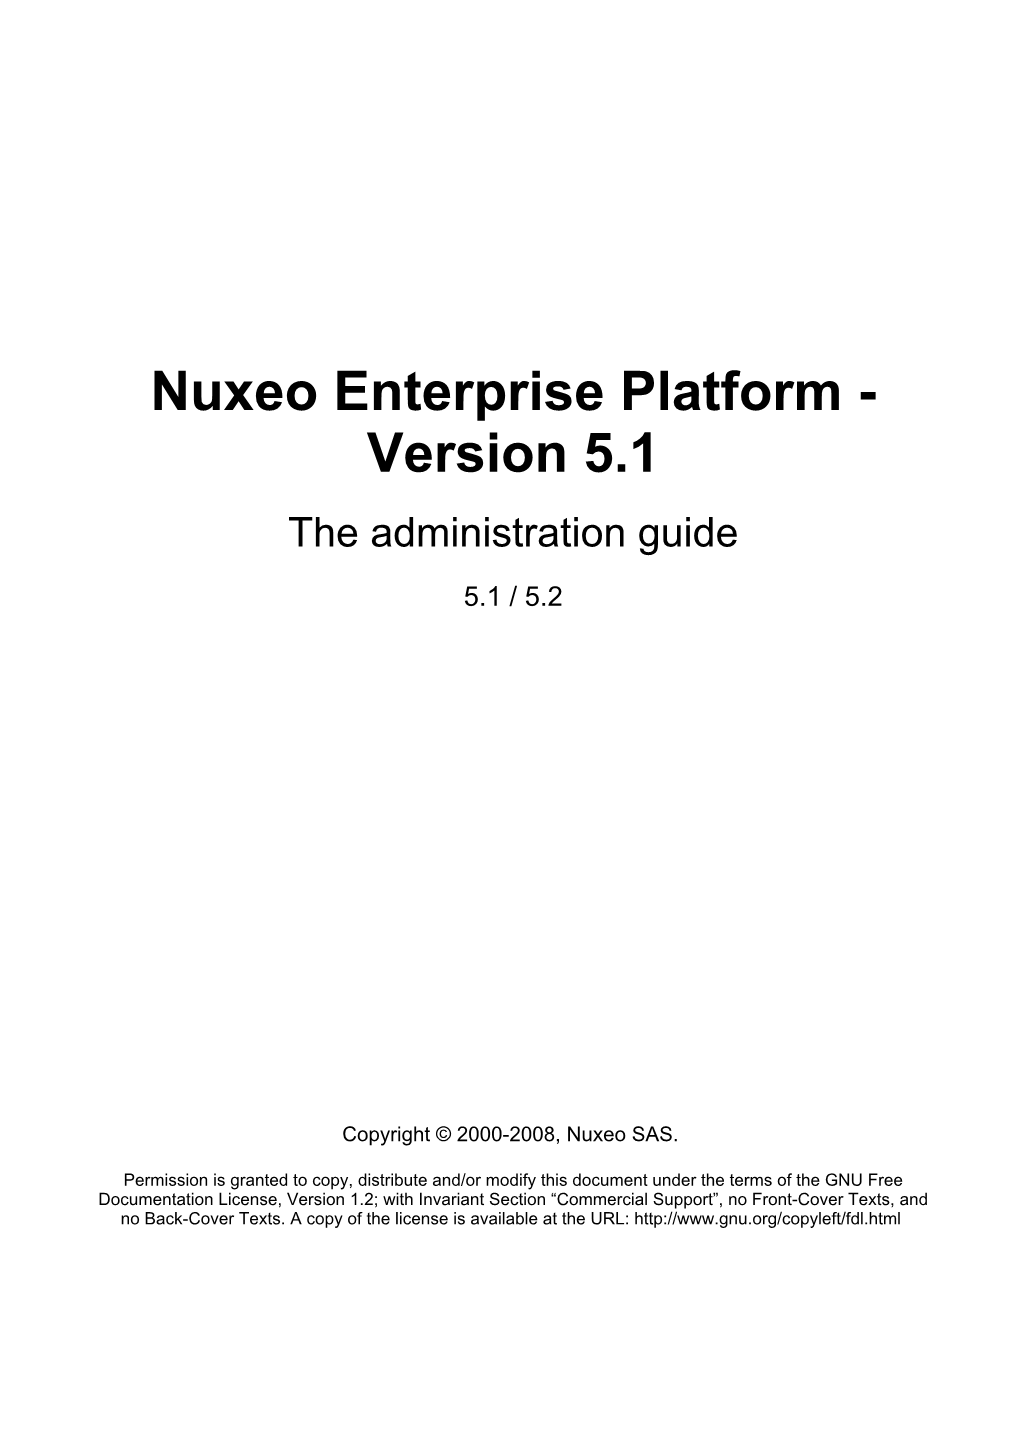 Nuxeo Enterprise Platform - Version 5.1 the Administration Guide